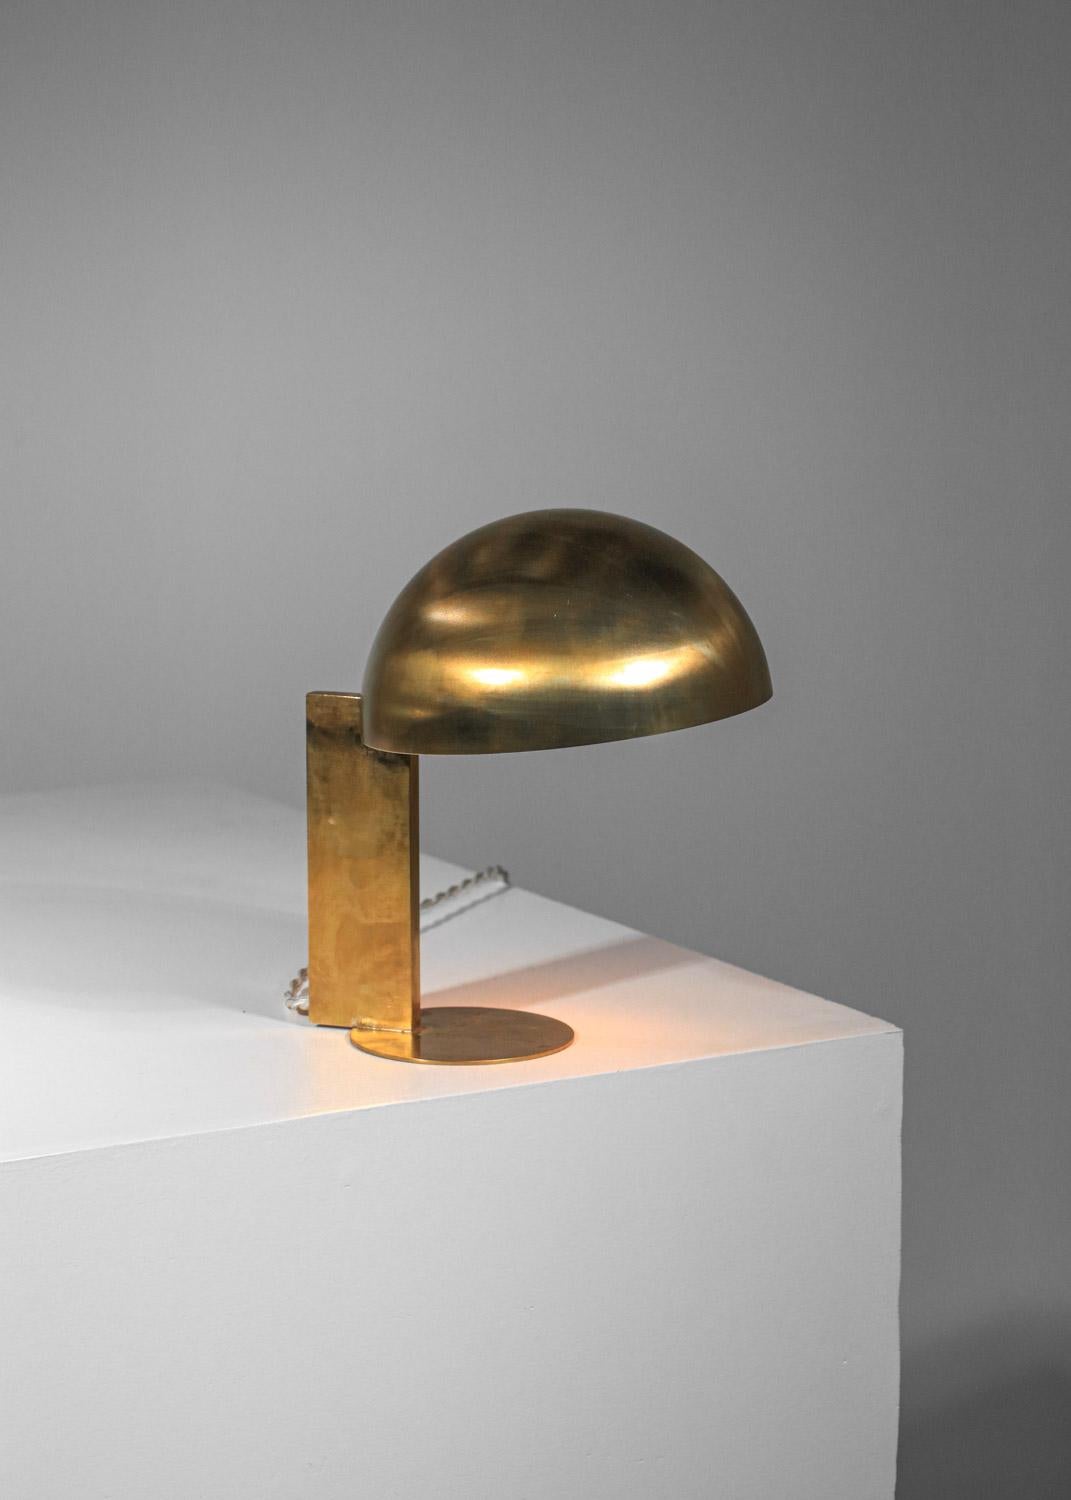 Brass Modern table lamp in solid brass 60's moderniste style by Danke studio  For Sale